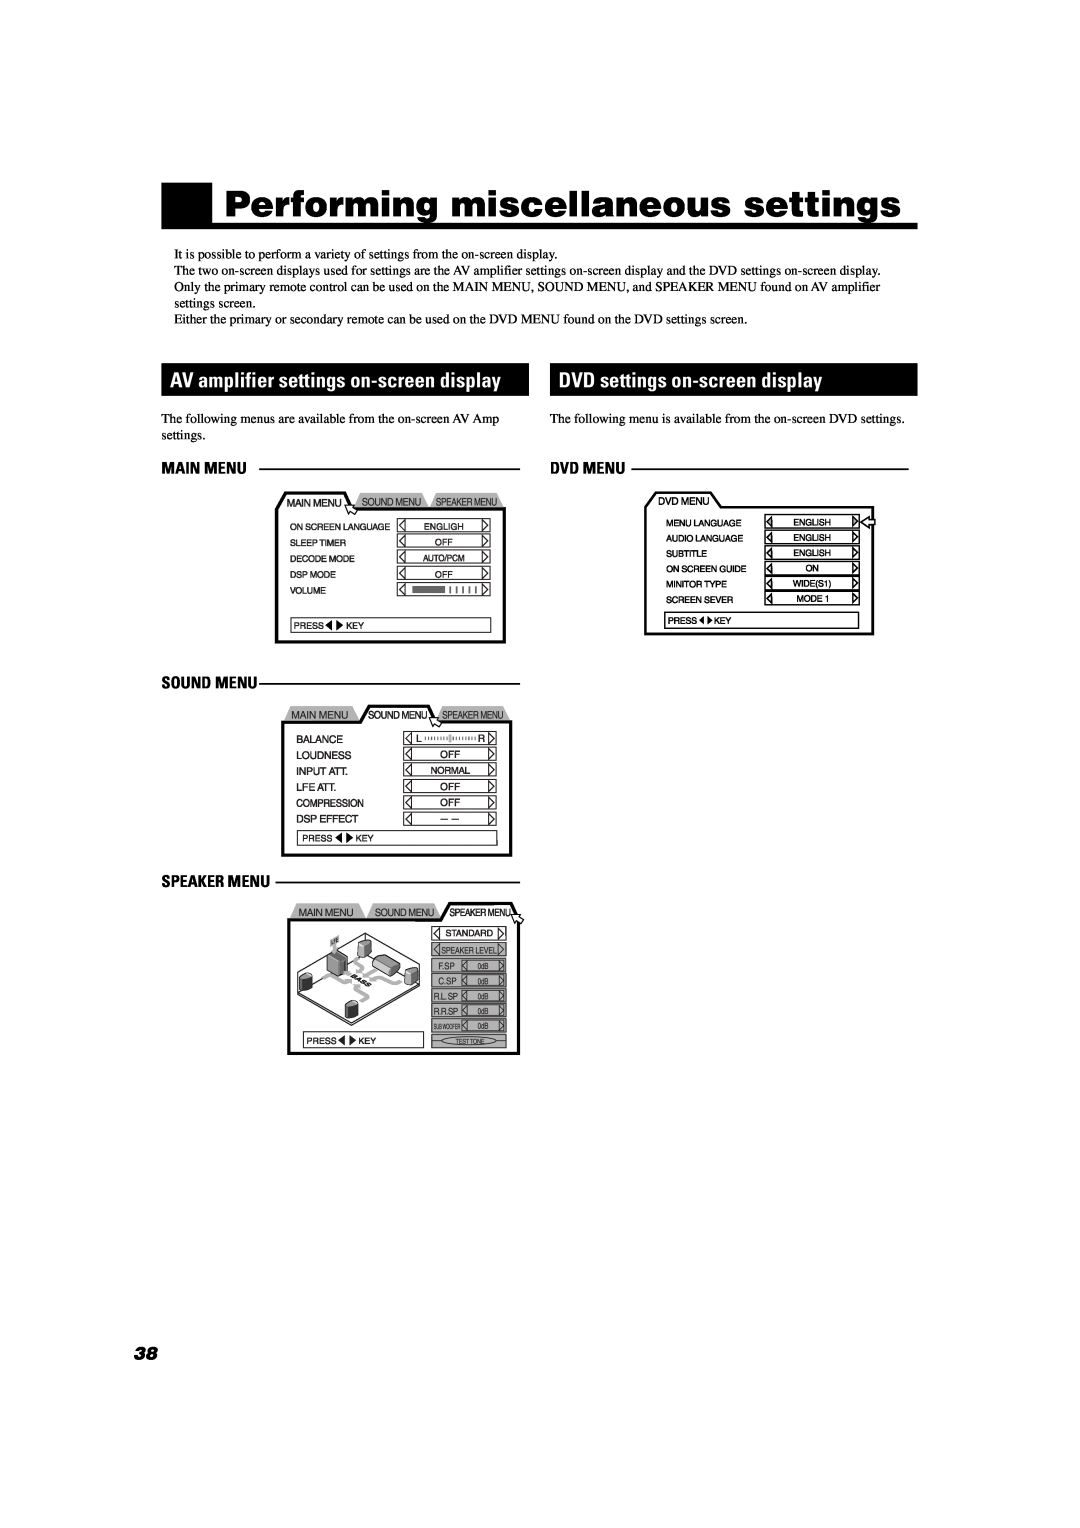 JVC TH-A10 manual Performing miscellaneous settings, DVD settings on-screendisplay, AV amplifier settings on-screendisplay 